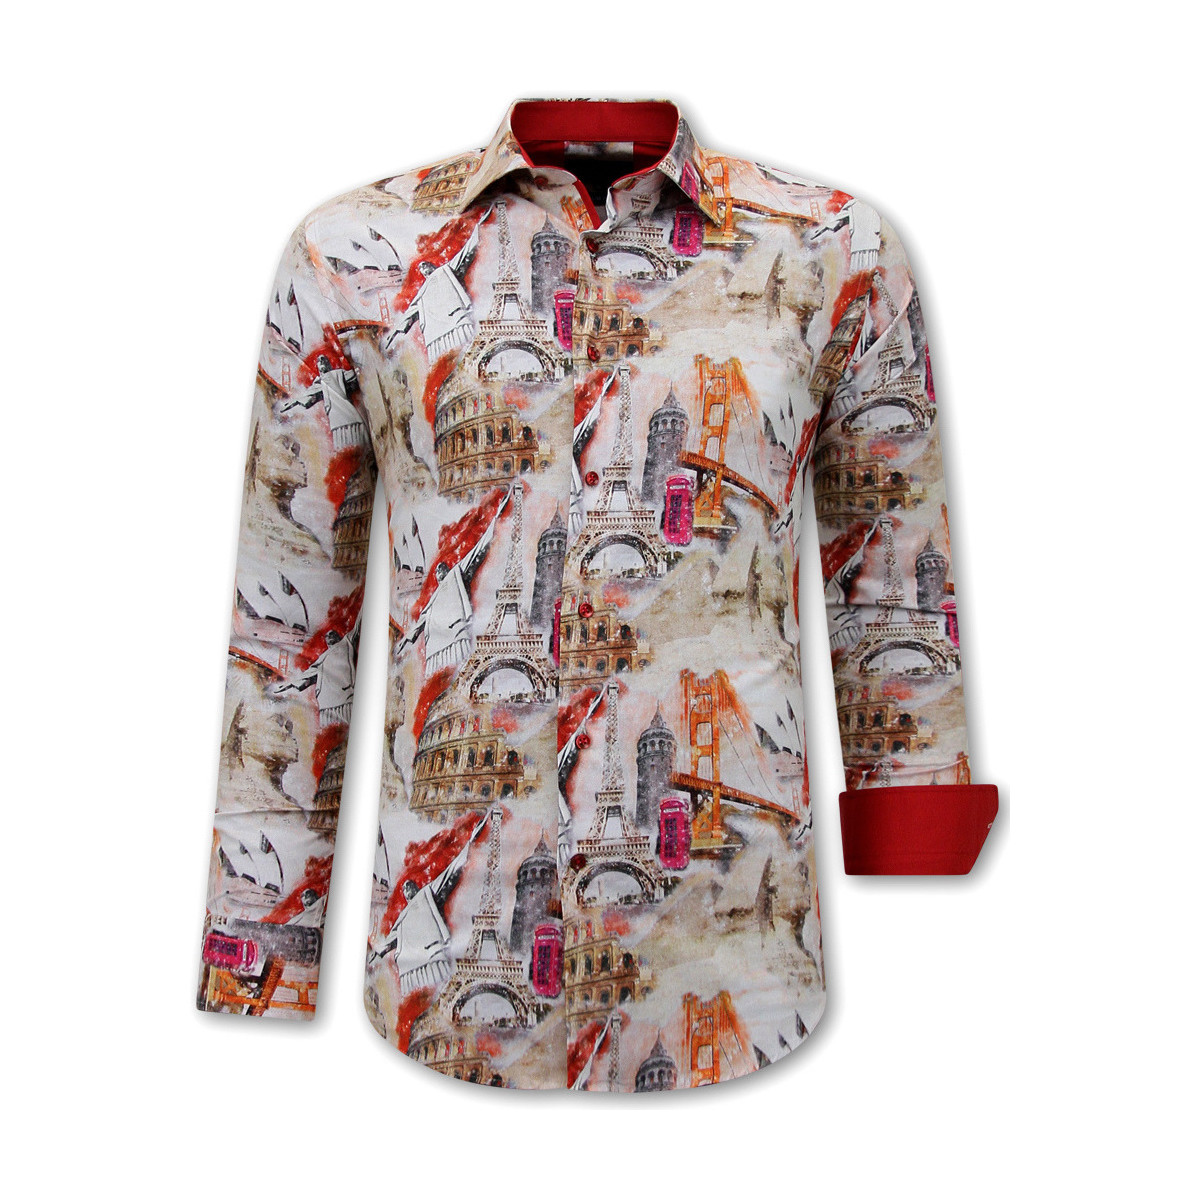 Textiel Heren Overhemden lange mouwen Gentile Bellini Hippe Multicolour